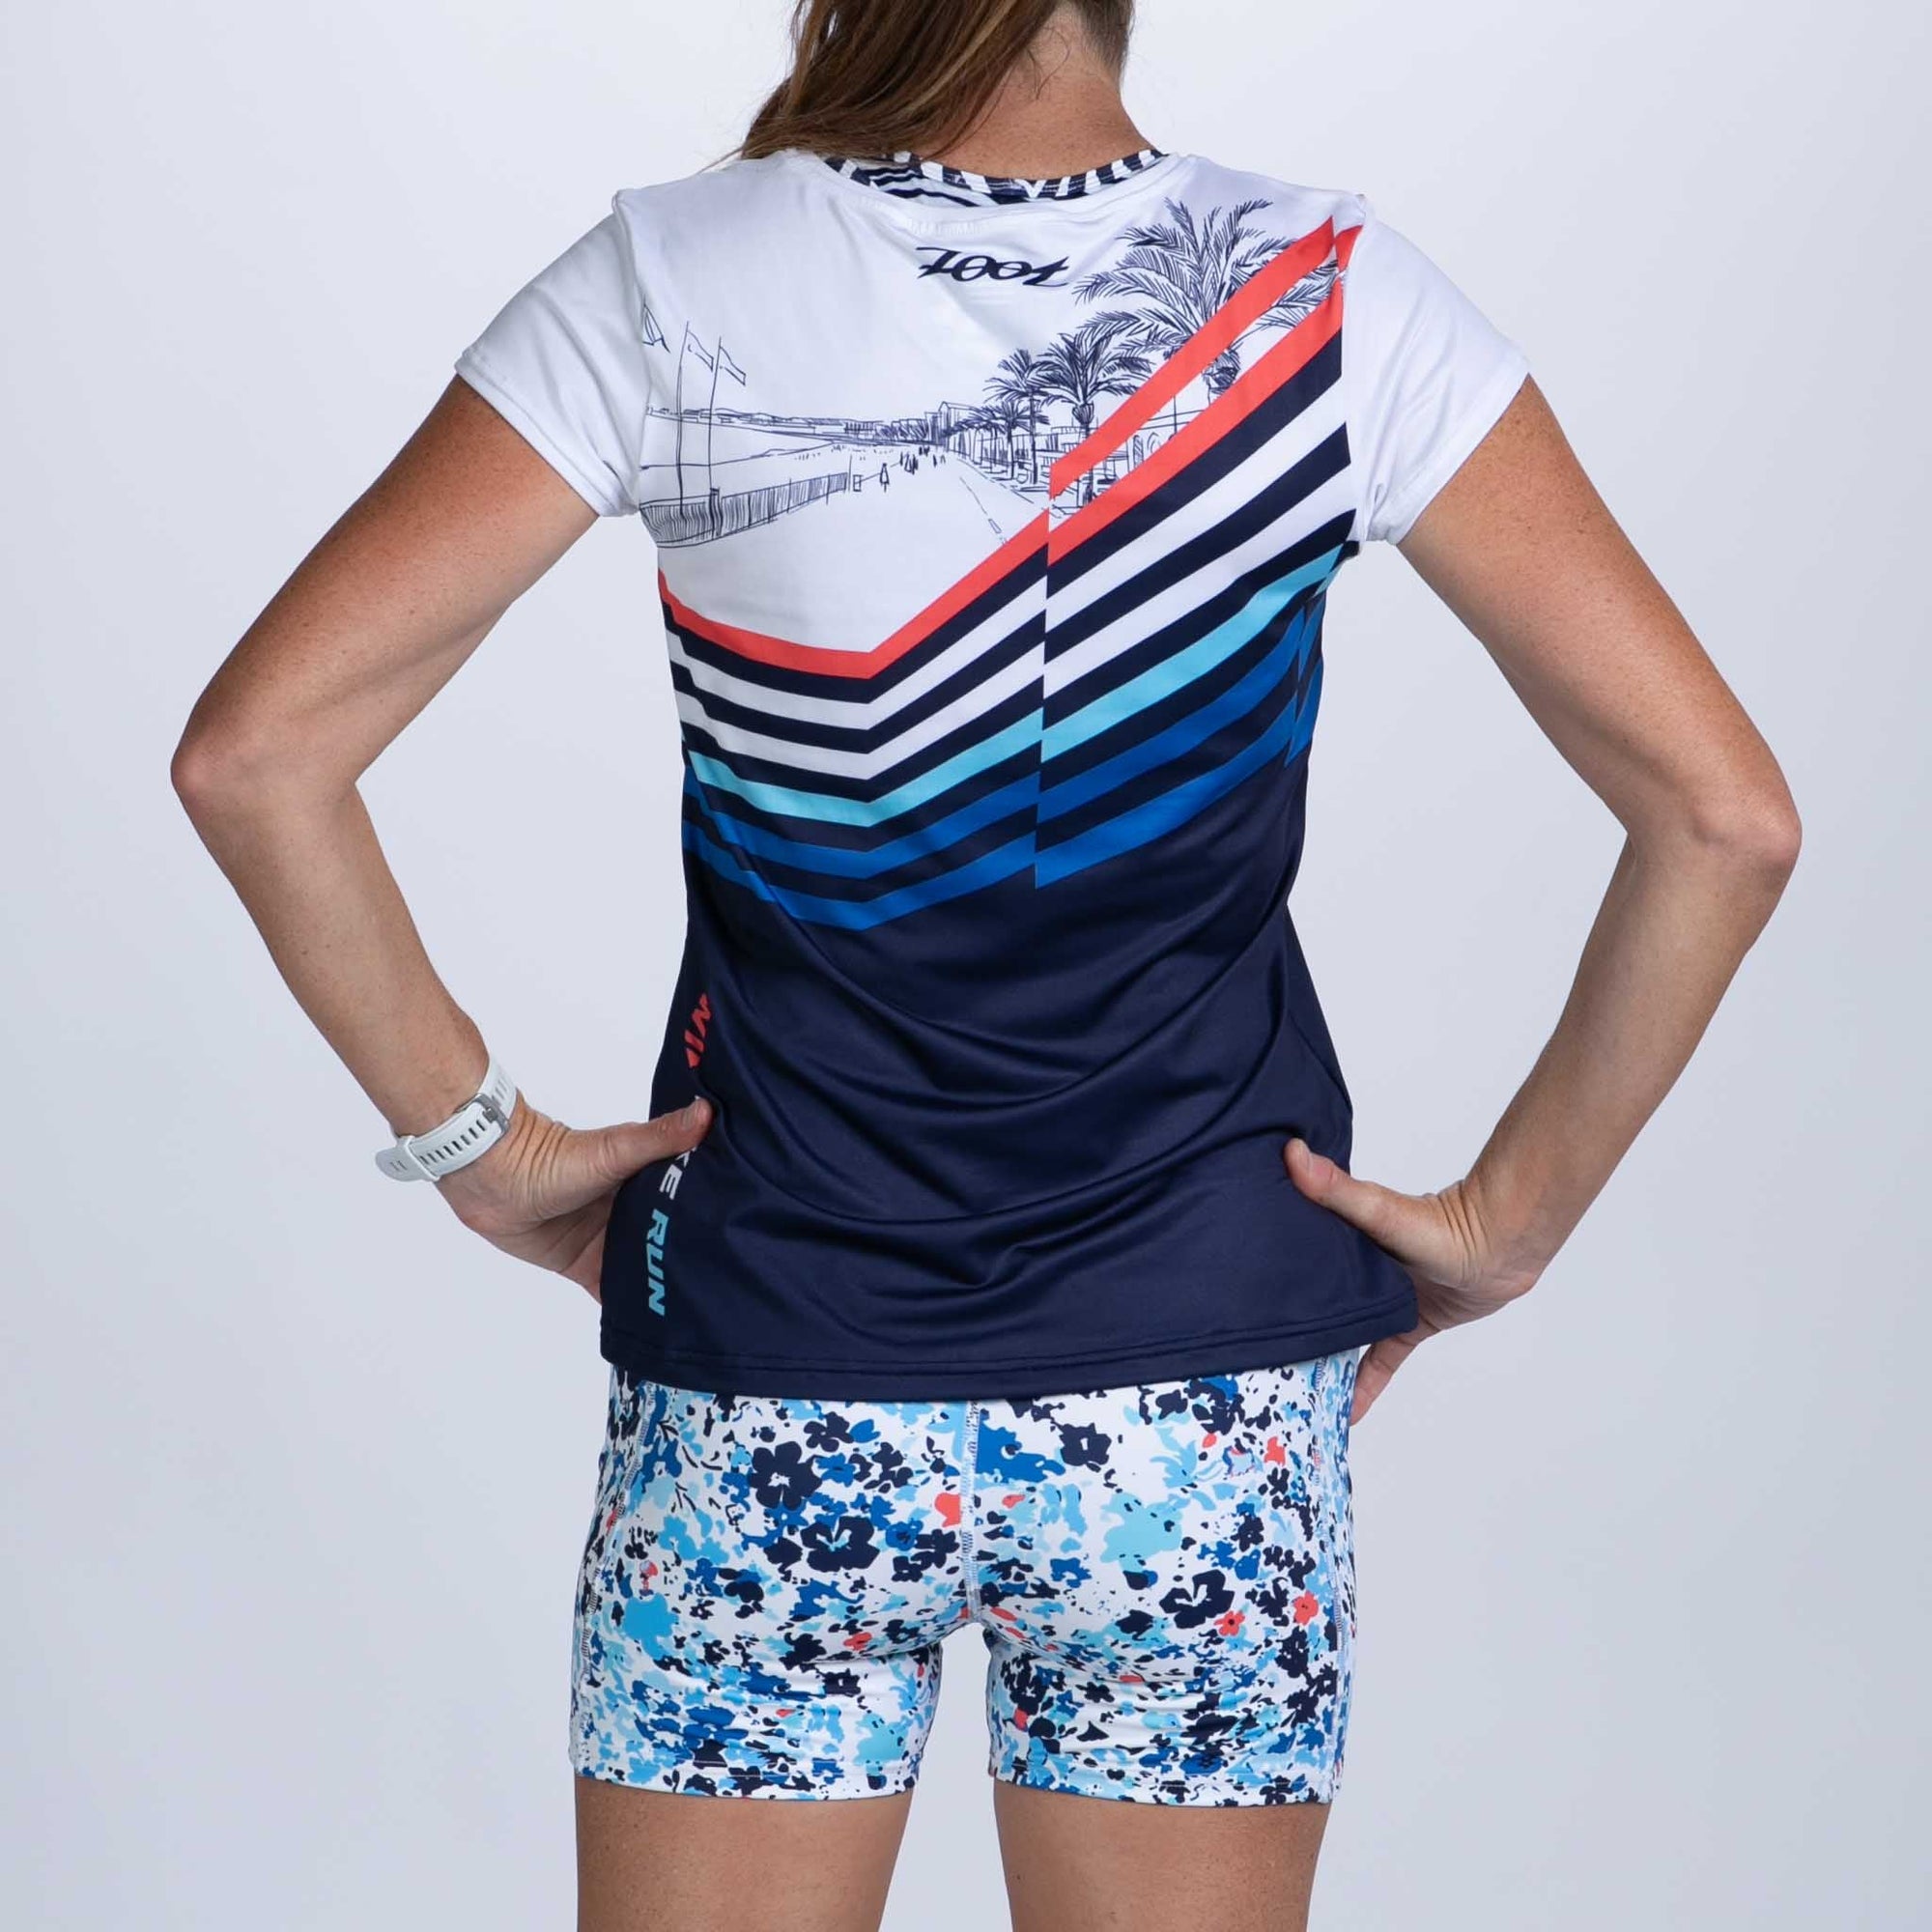 Zoot Sports RUN TEE Women's Ltd Run Tee - Cote d'Azur